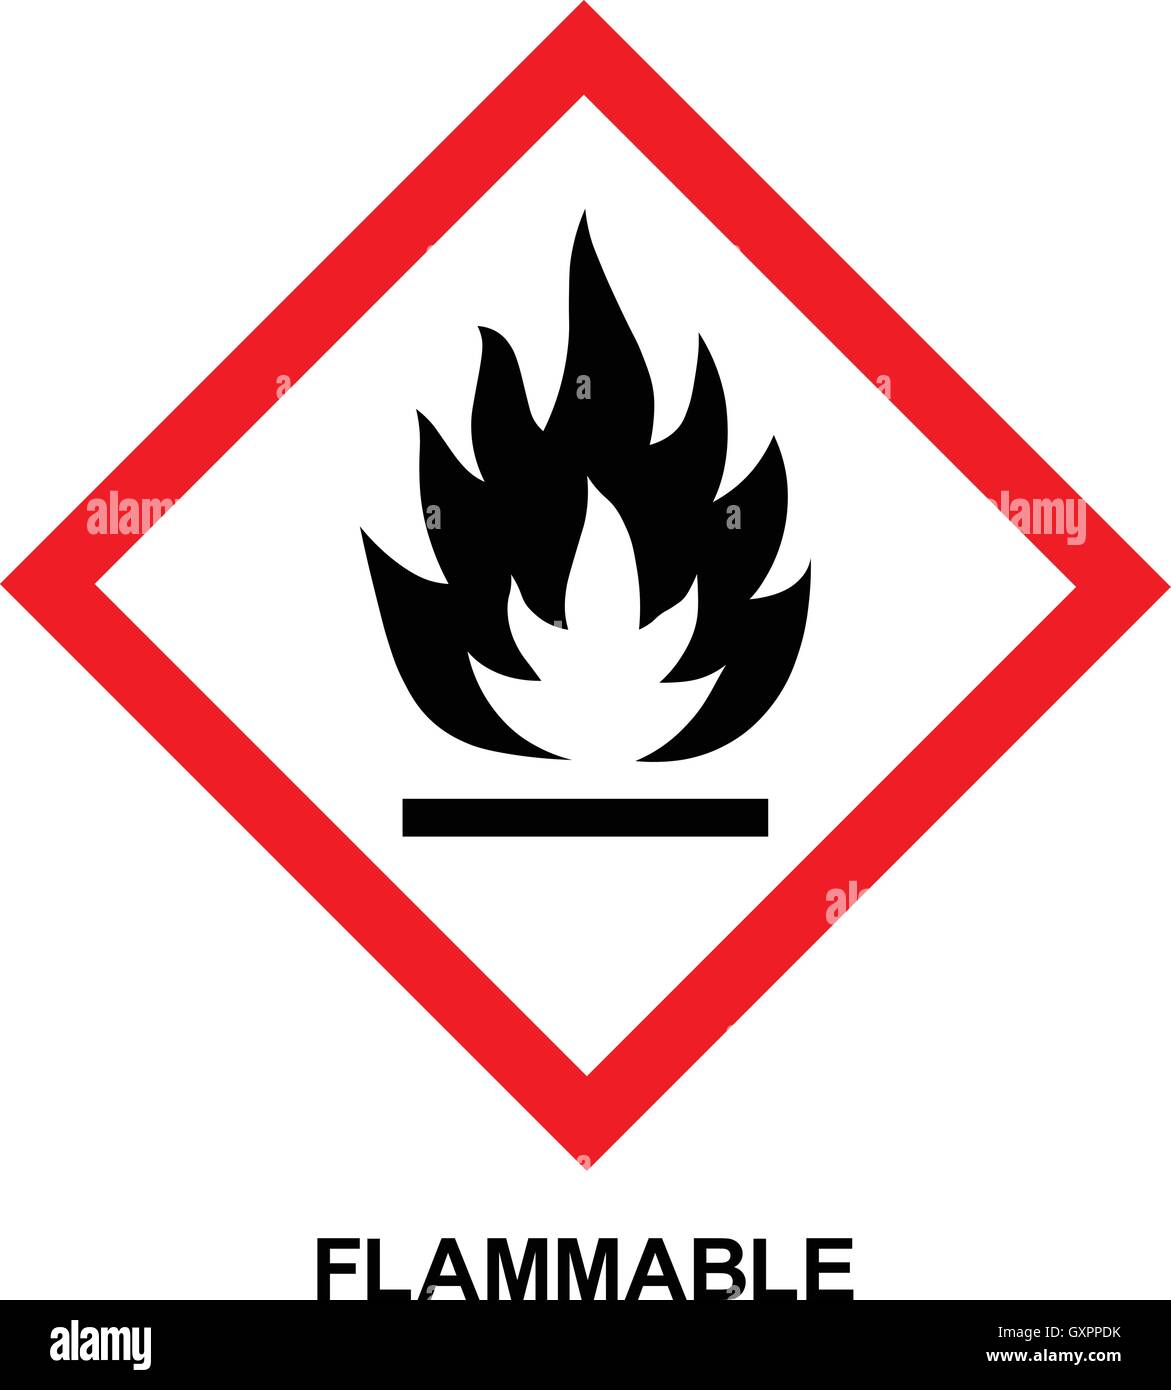 GHS hazard pictogram - FLAMMABLE, hazard warning sign flammable, isolated vector illustration. Stock Vector